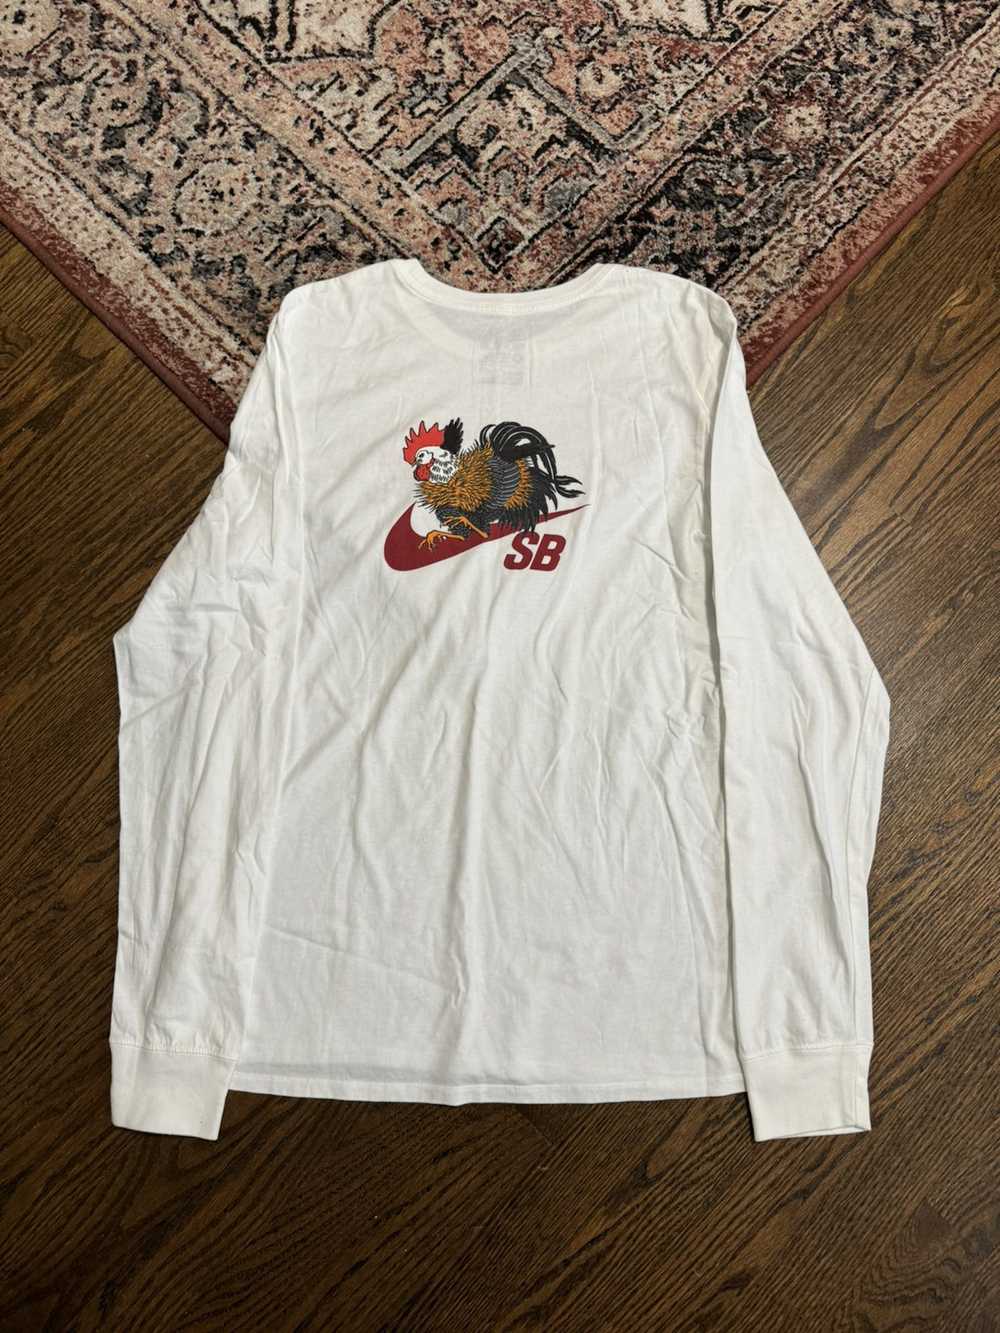 Nike Nike SB Rooster Long Sleeve T-Shirt - image 4